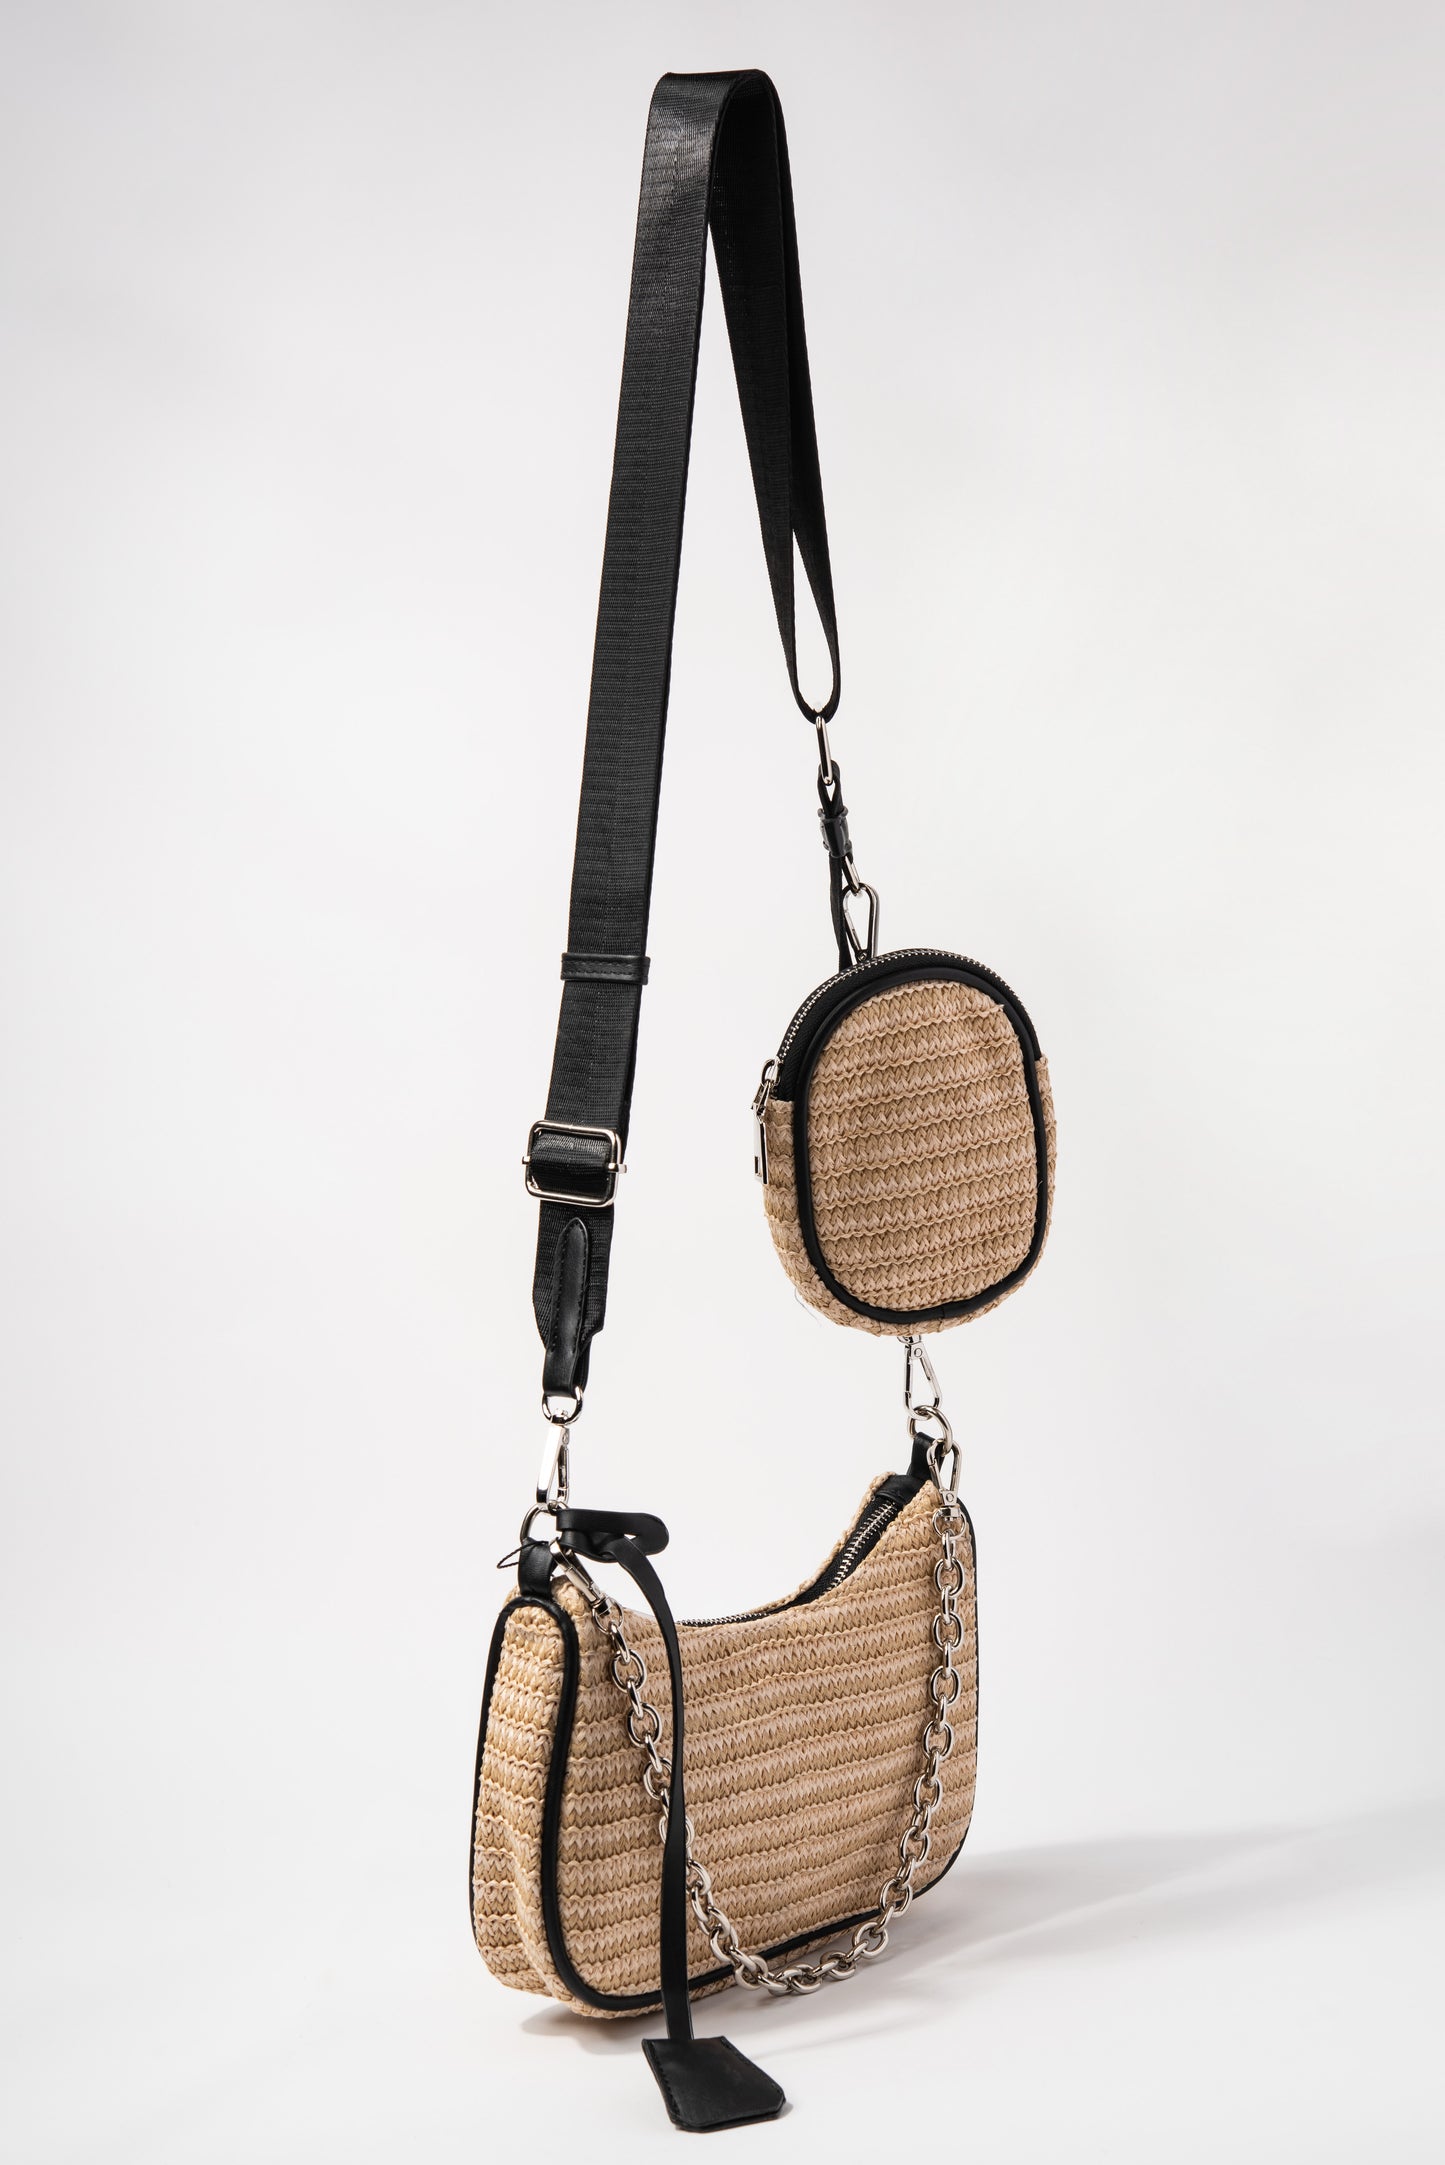 Dual Strap Straw Crossbody Shoulder Bag with Detachable Coin Purse - Black